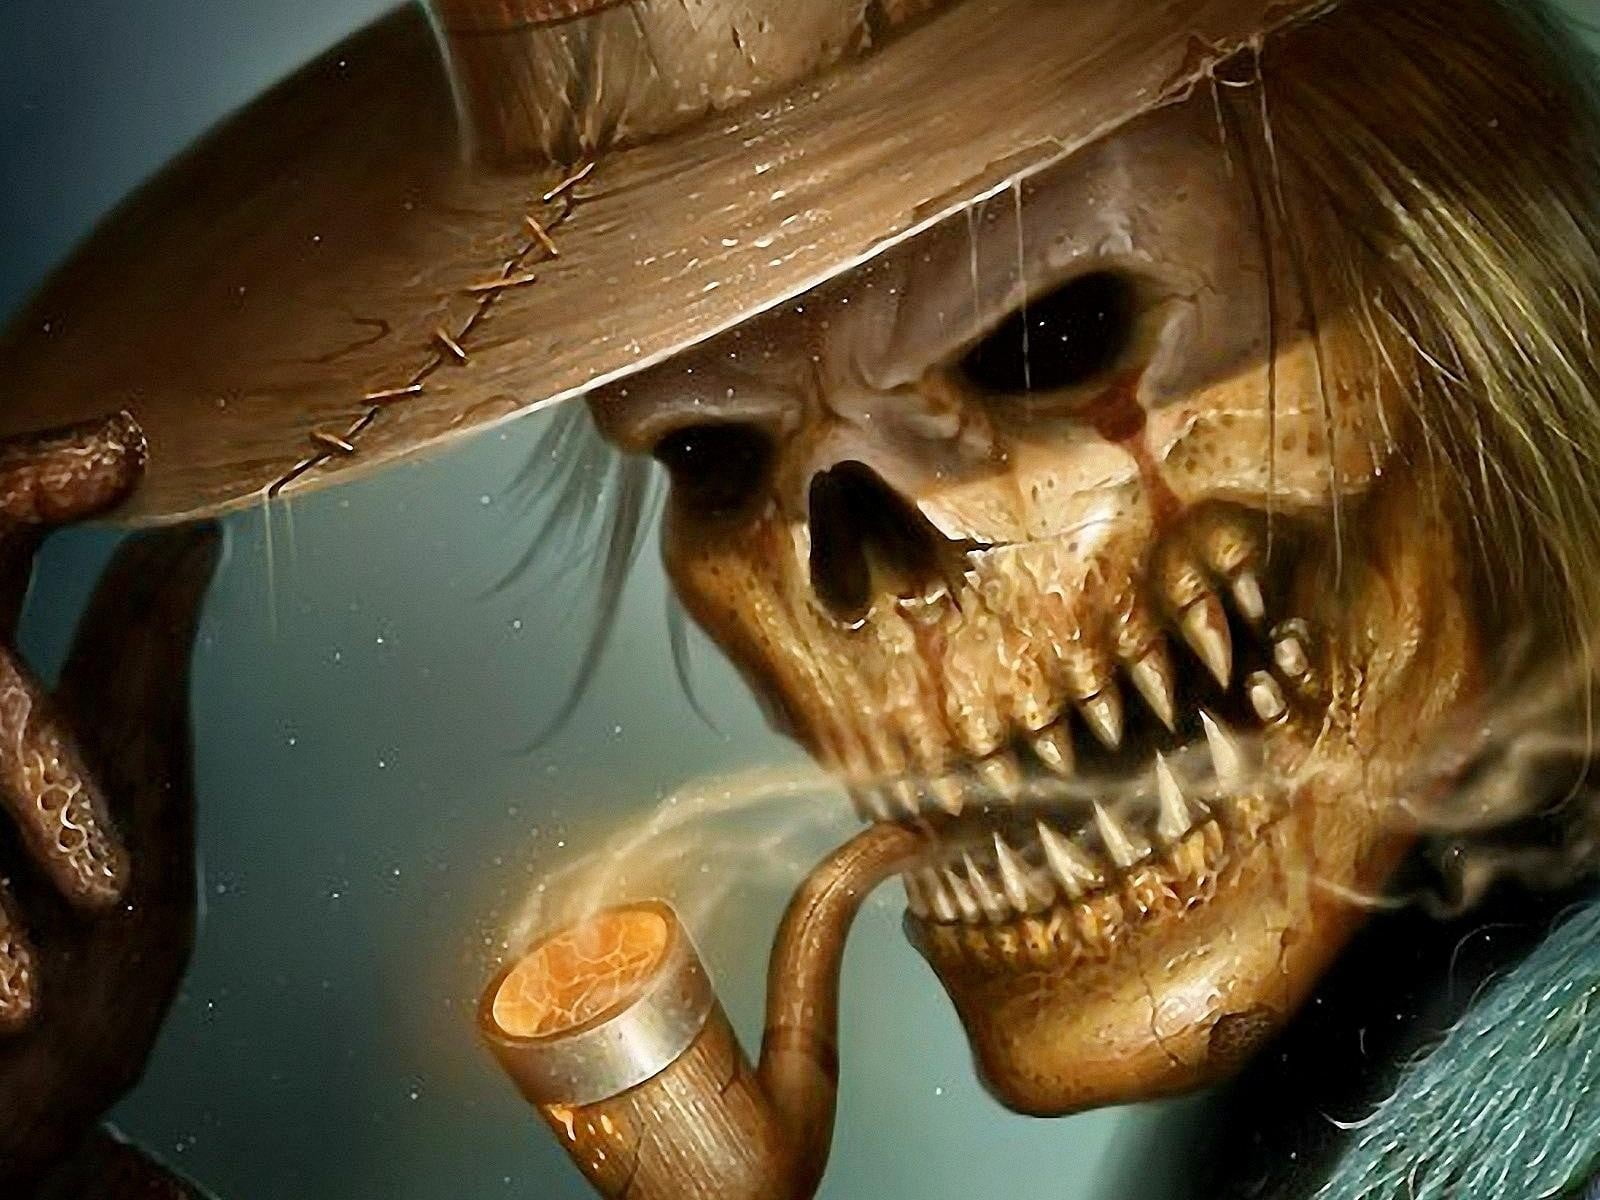 smoking skull illustration, creepy, evil, death, corpse